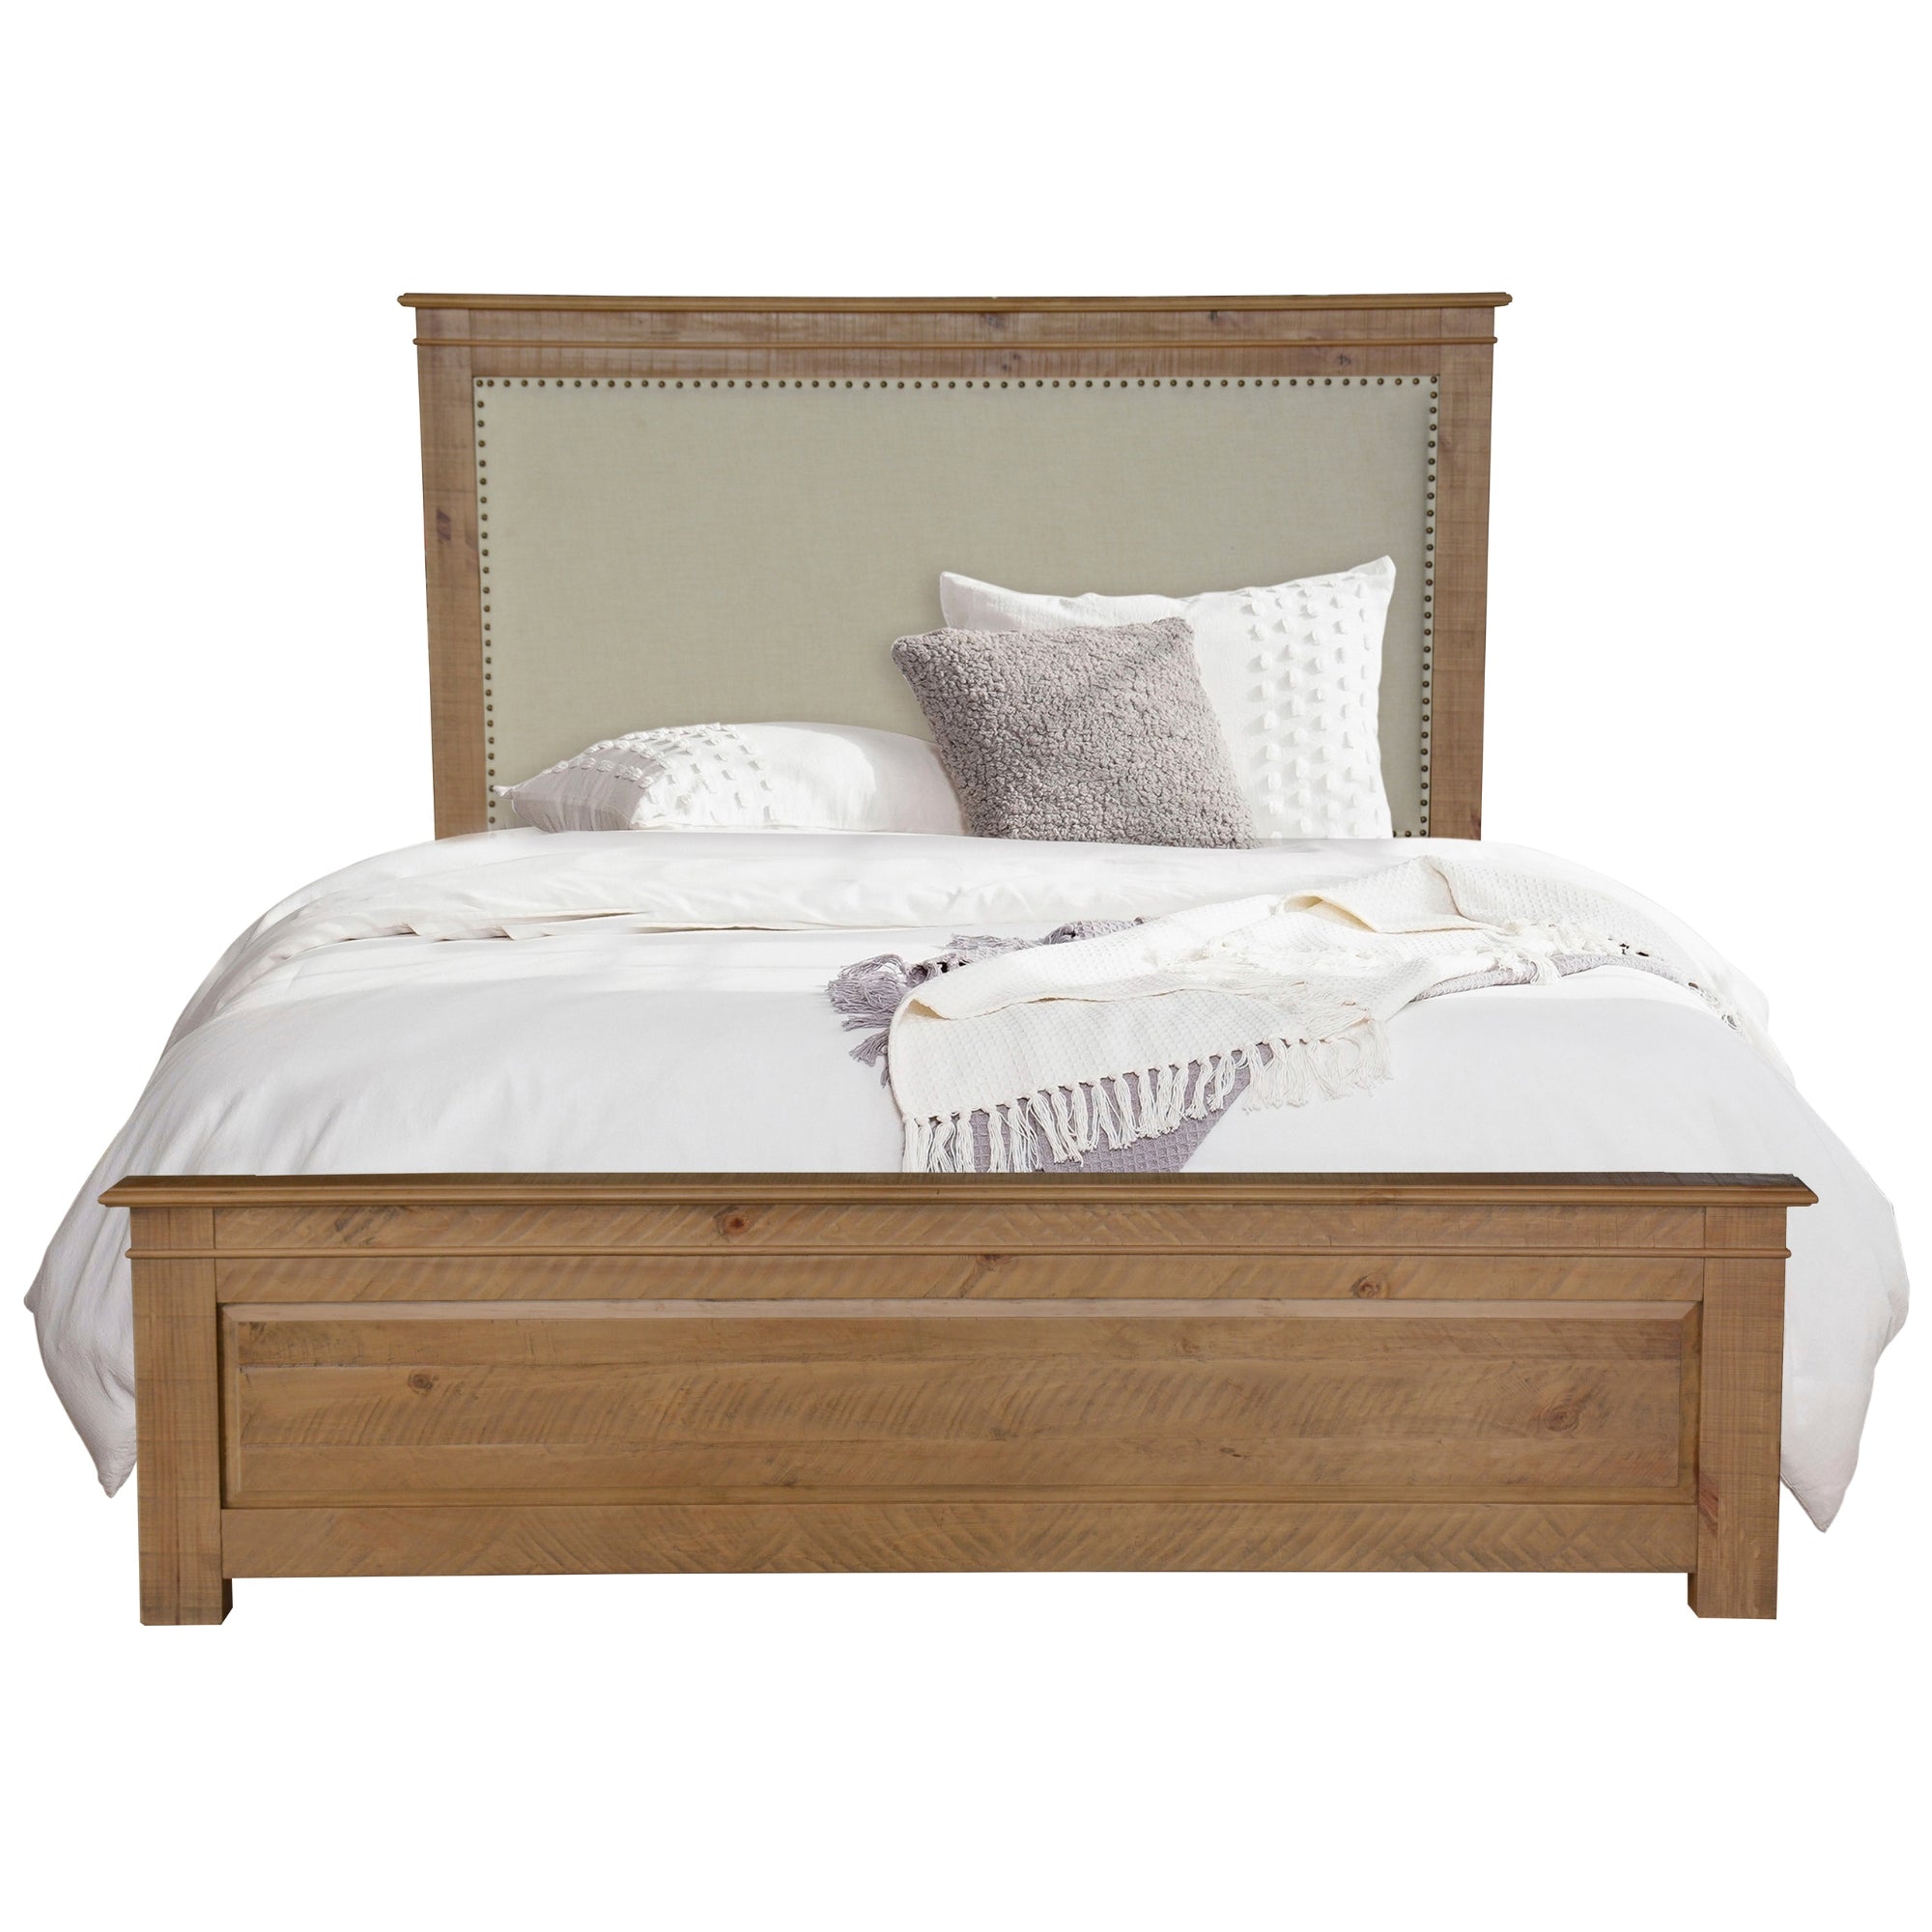 Rustic Solid Pine 4pc Queen Bedroom Suite with Storage